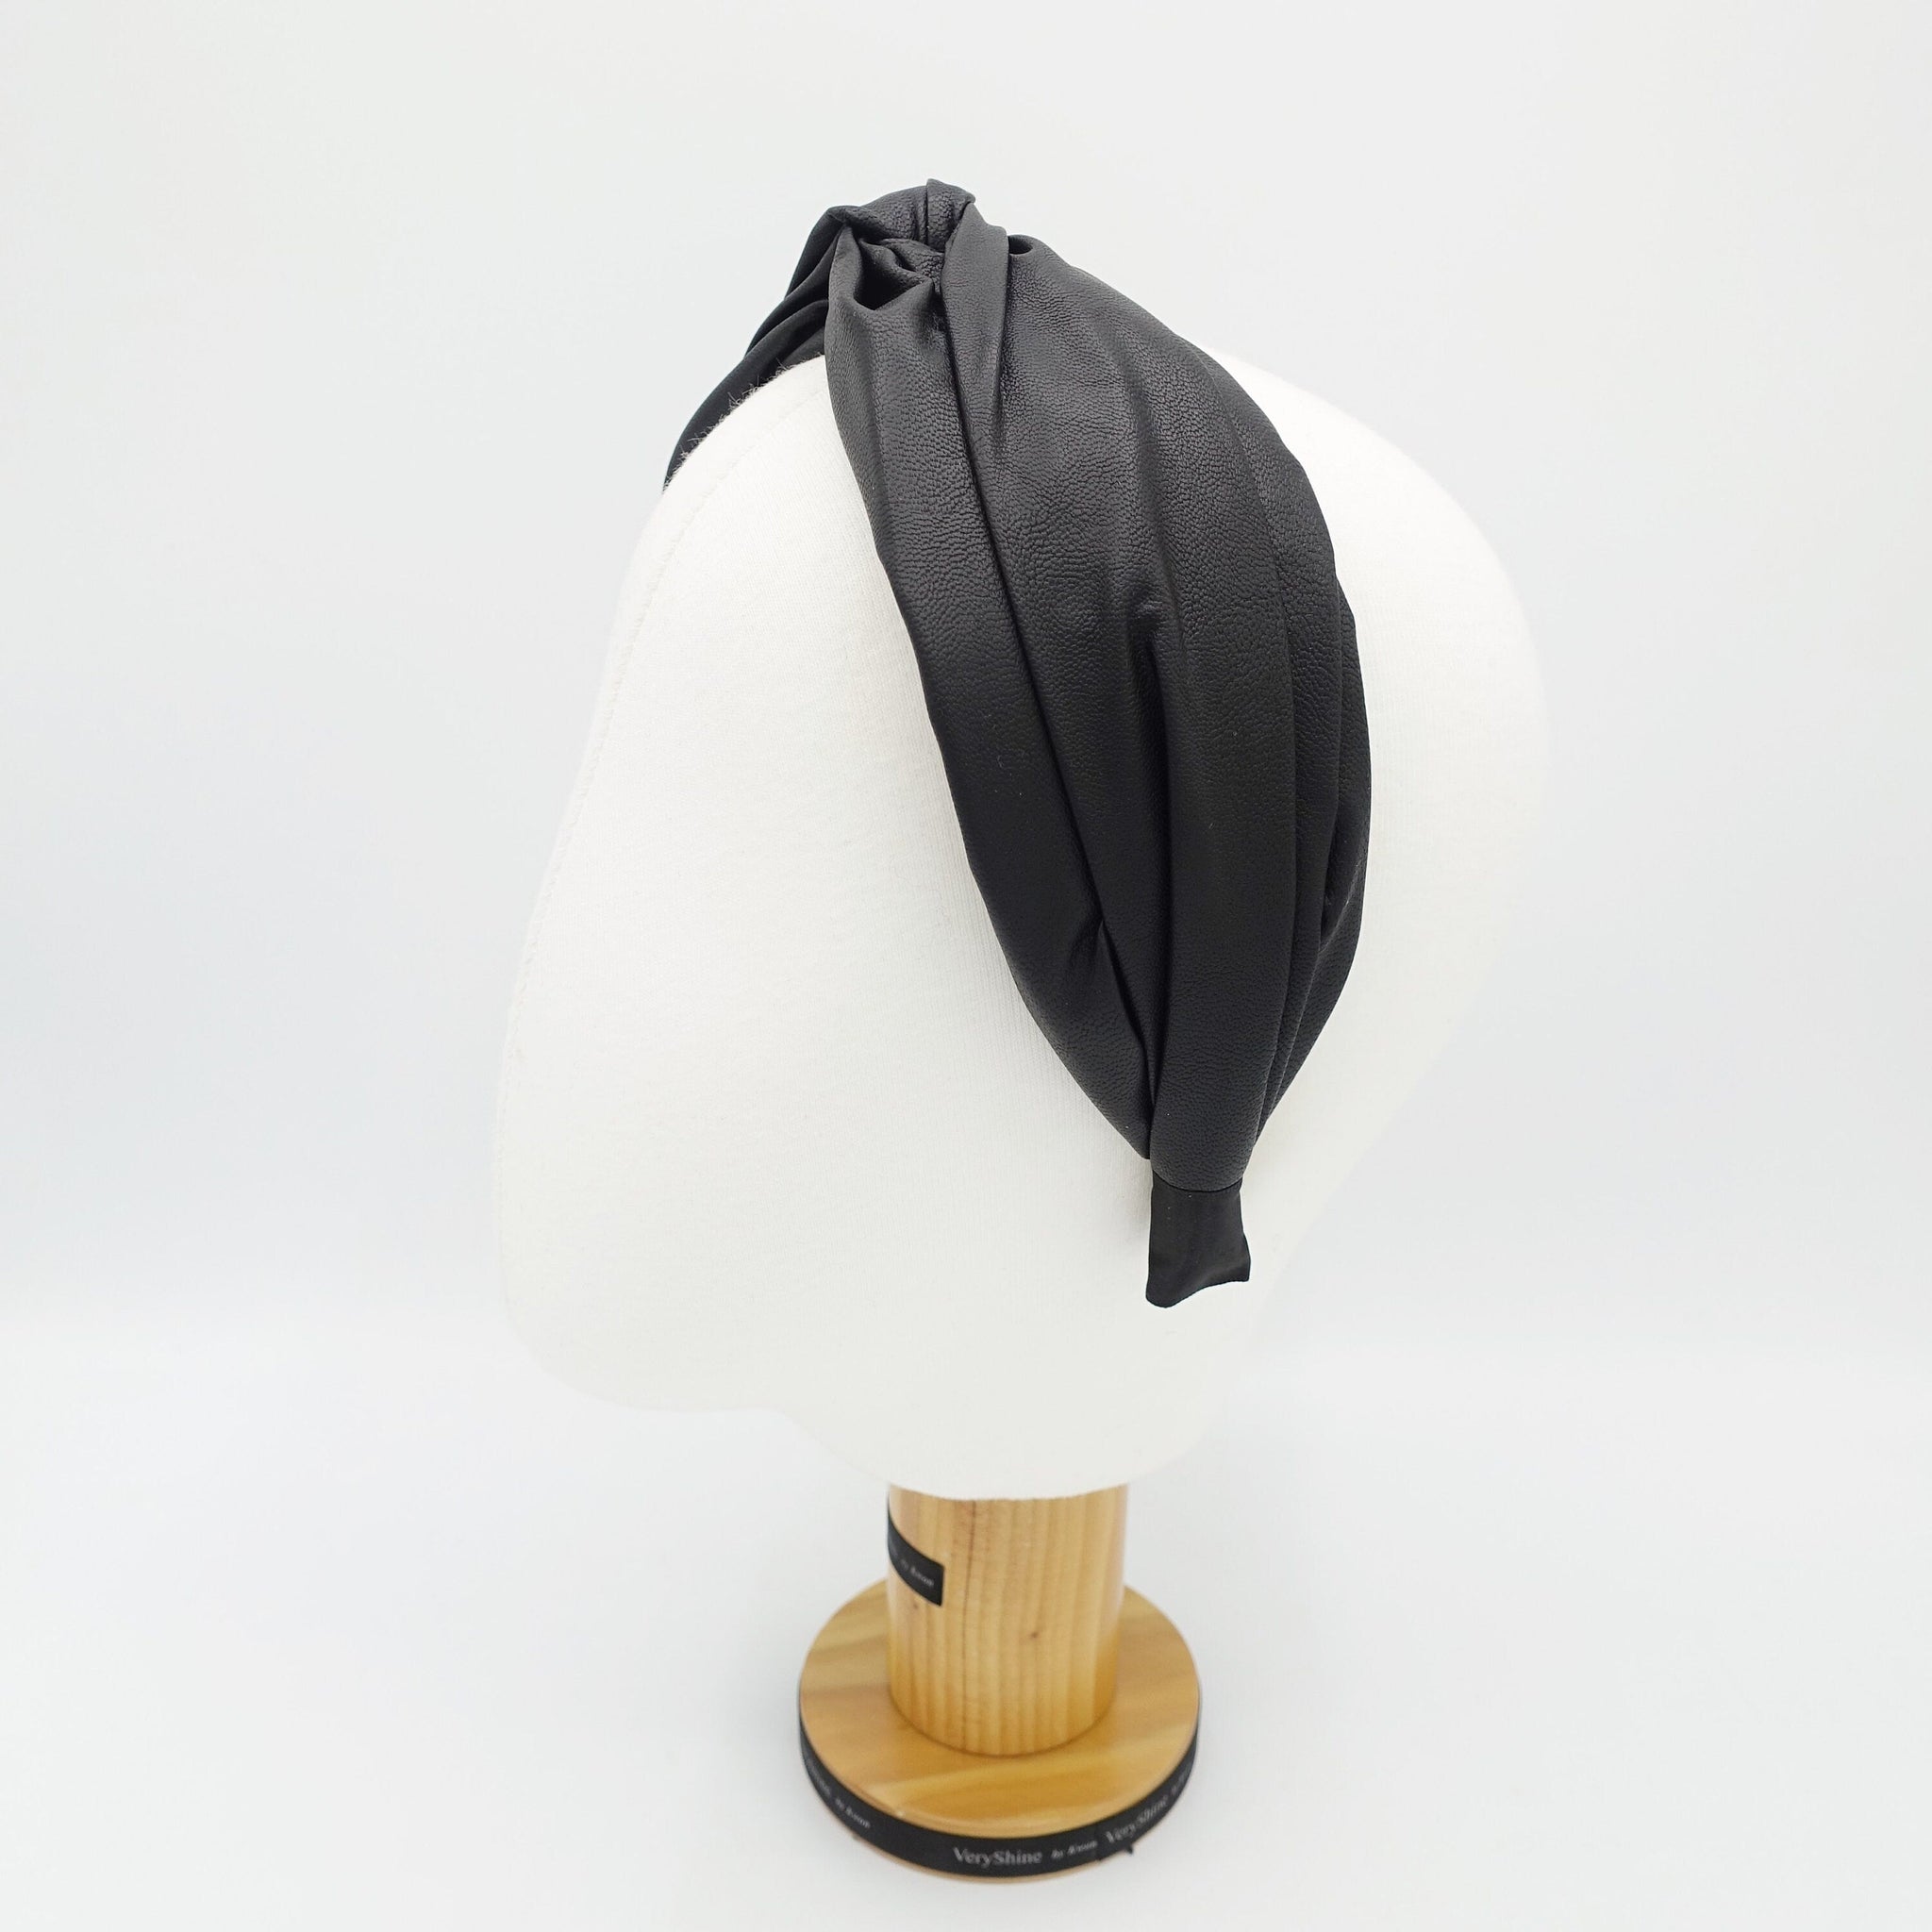 veryshine.com Headband Black faux leather cross headband Autumn Winter hairband for women